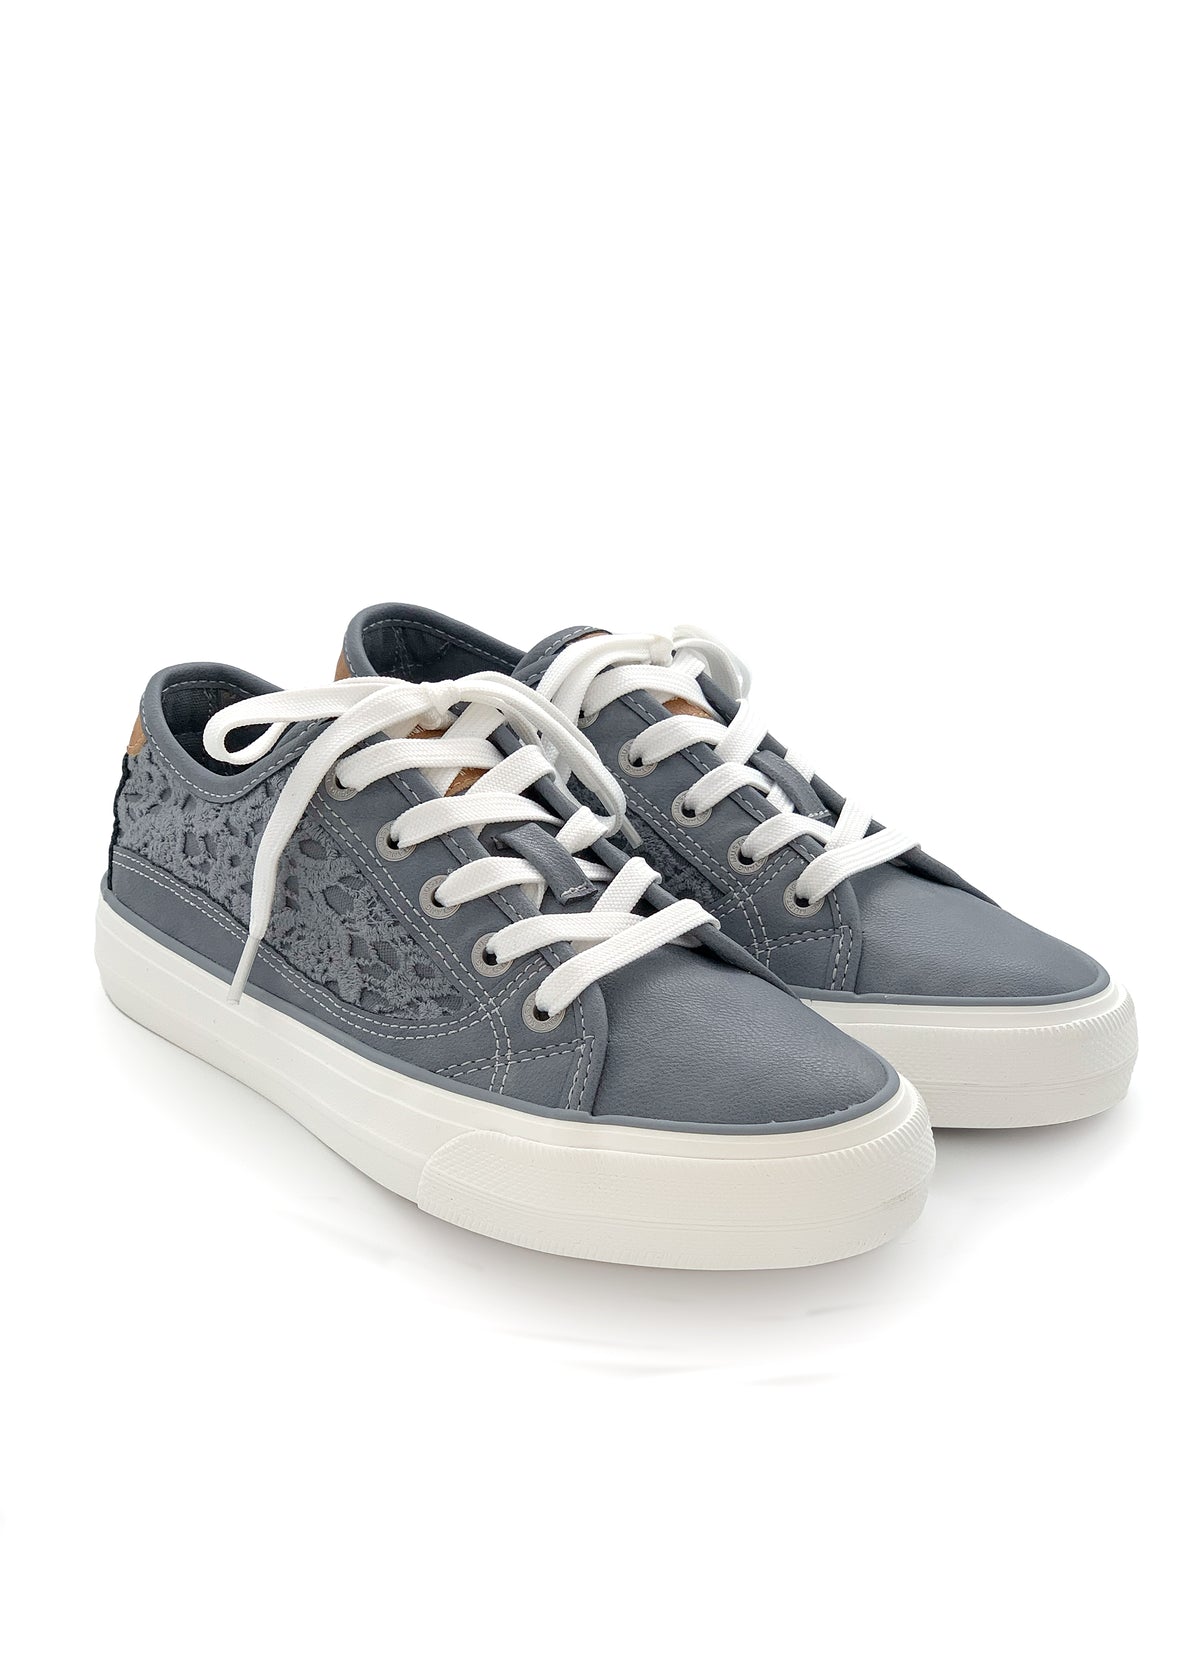 Lace sneakers - blue-grey, vegan